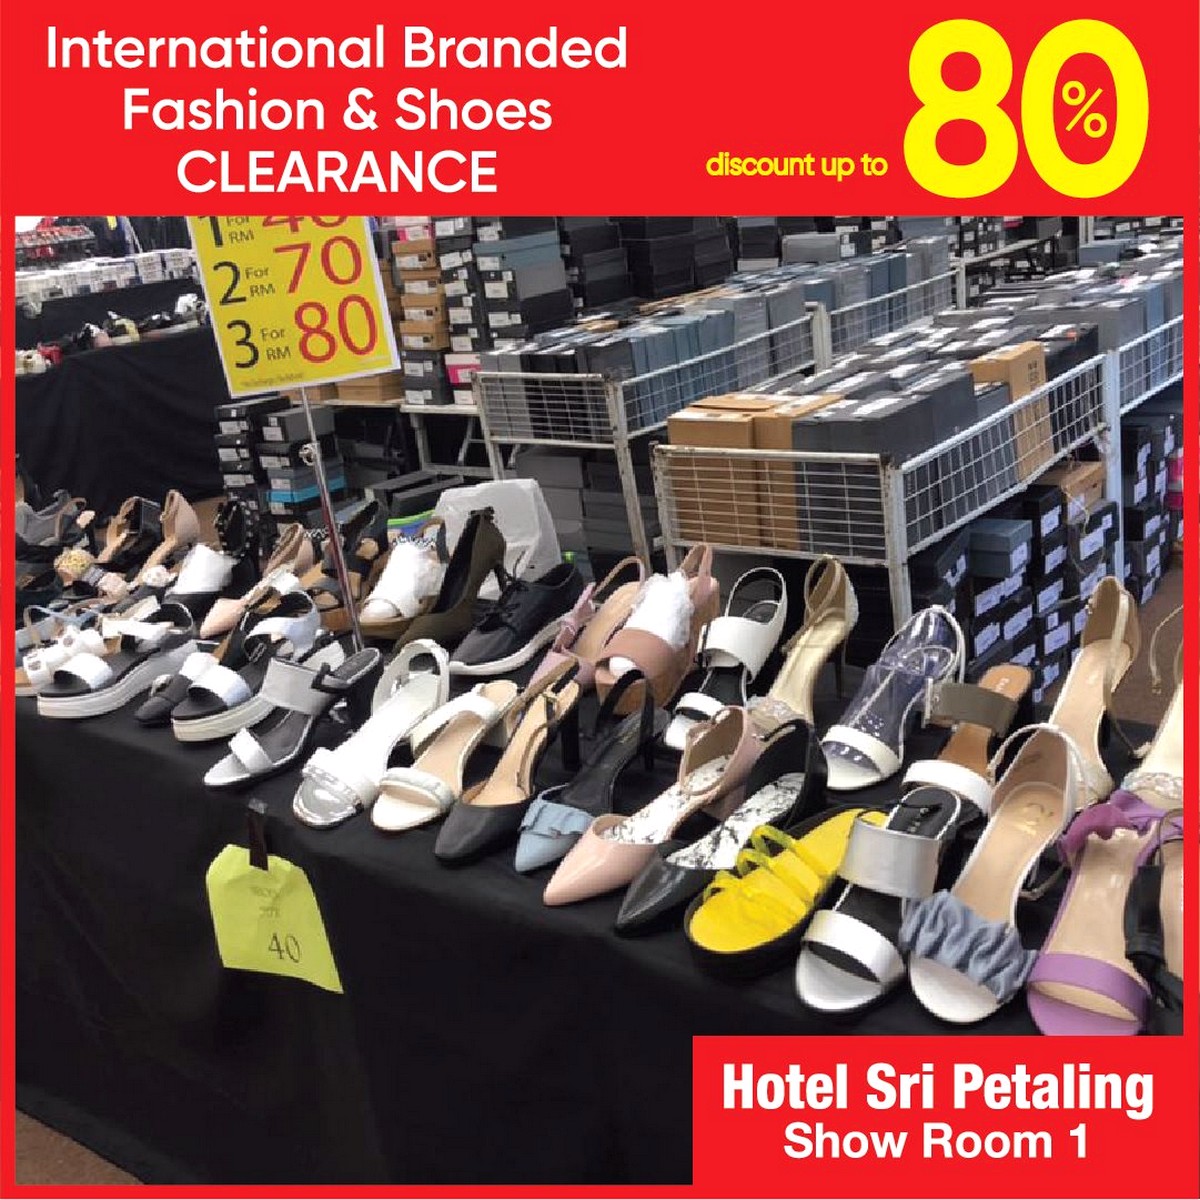 Hotel-Sri-Petaling-Warehouse-Sale-2021-9 - Apparels Fashion Accessories Fashion Lifestyle & Department Store Kuala Lumpur Selangor Warehouse Sale & Clearance in Malaysia 